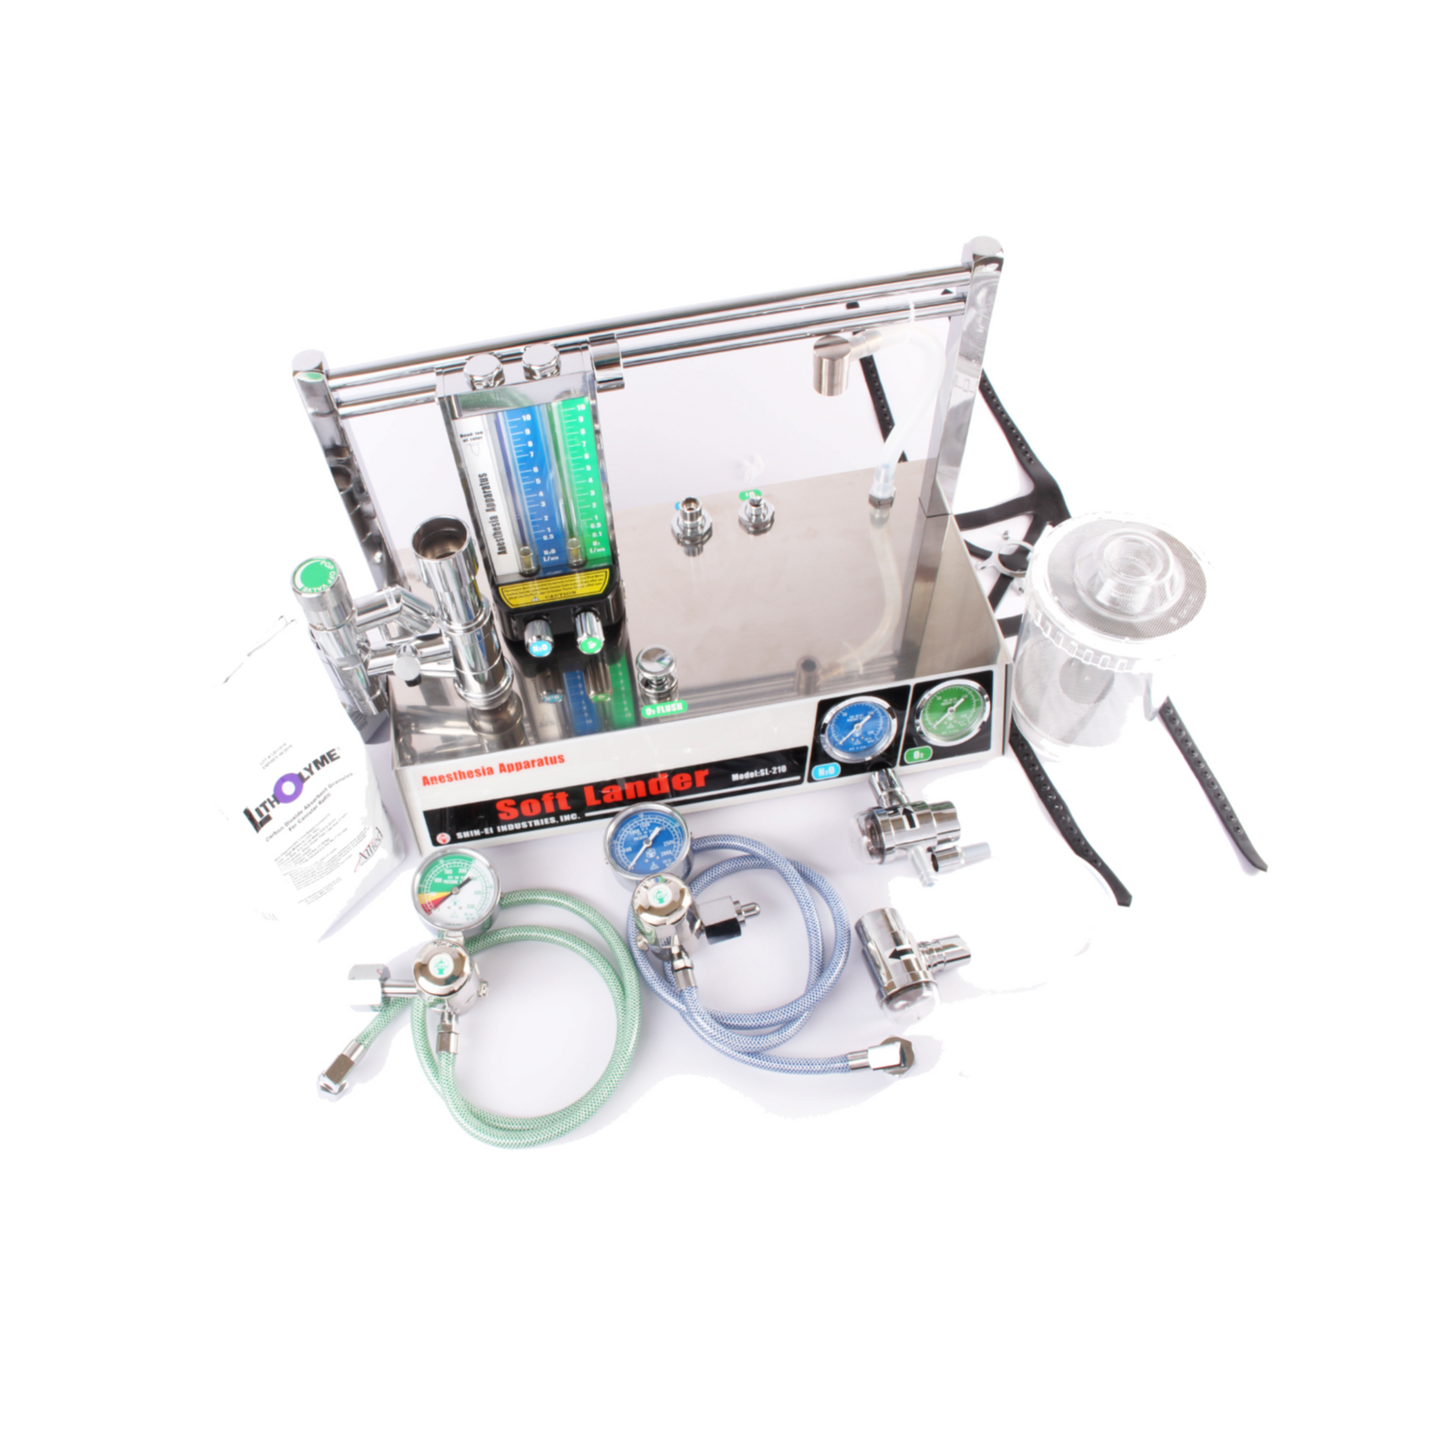 Anesthesia Machine SL-210 - Medical anesthesia equipment.